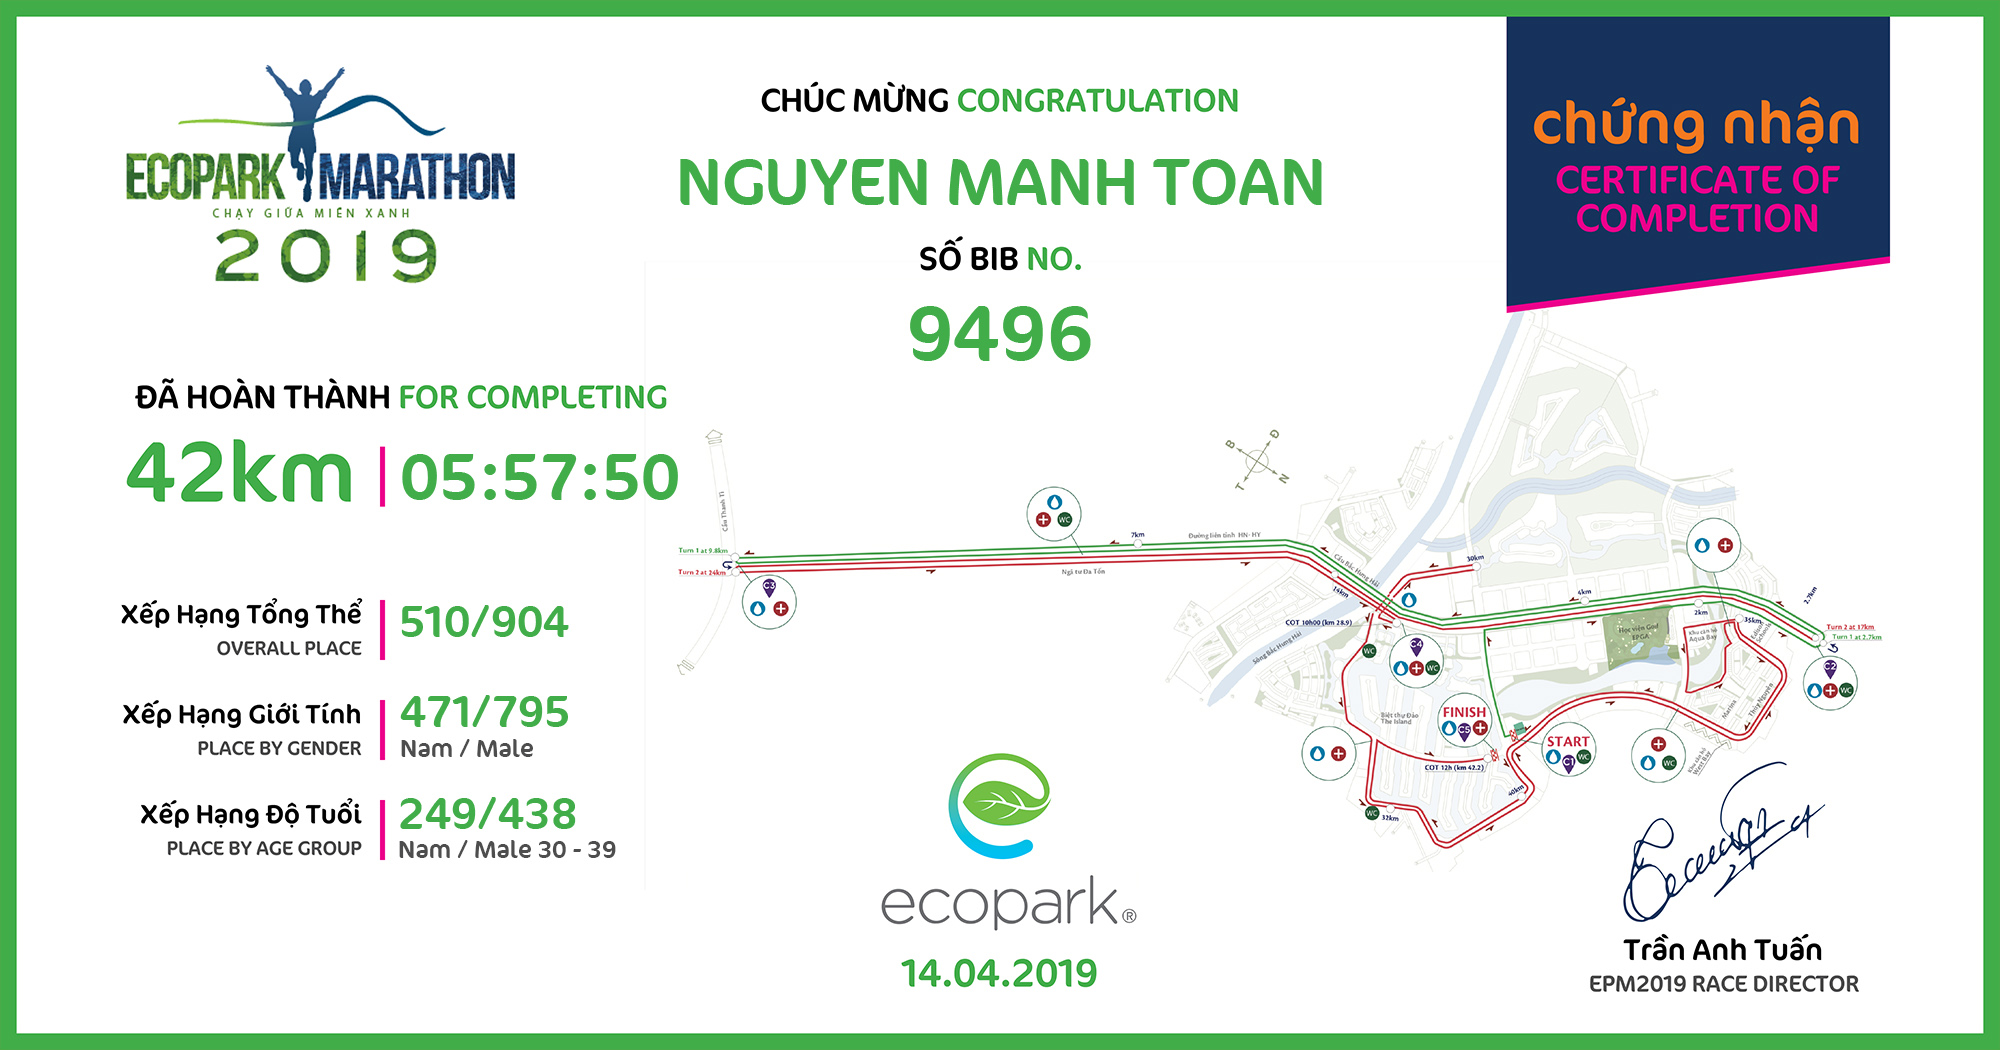 9496 - Nguyen Manh Toan